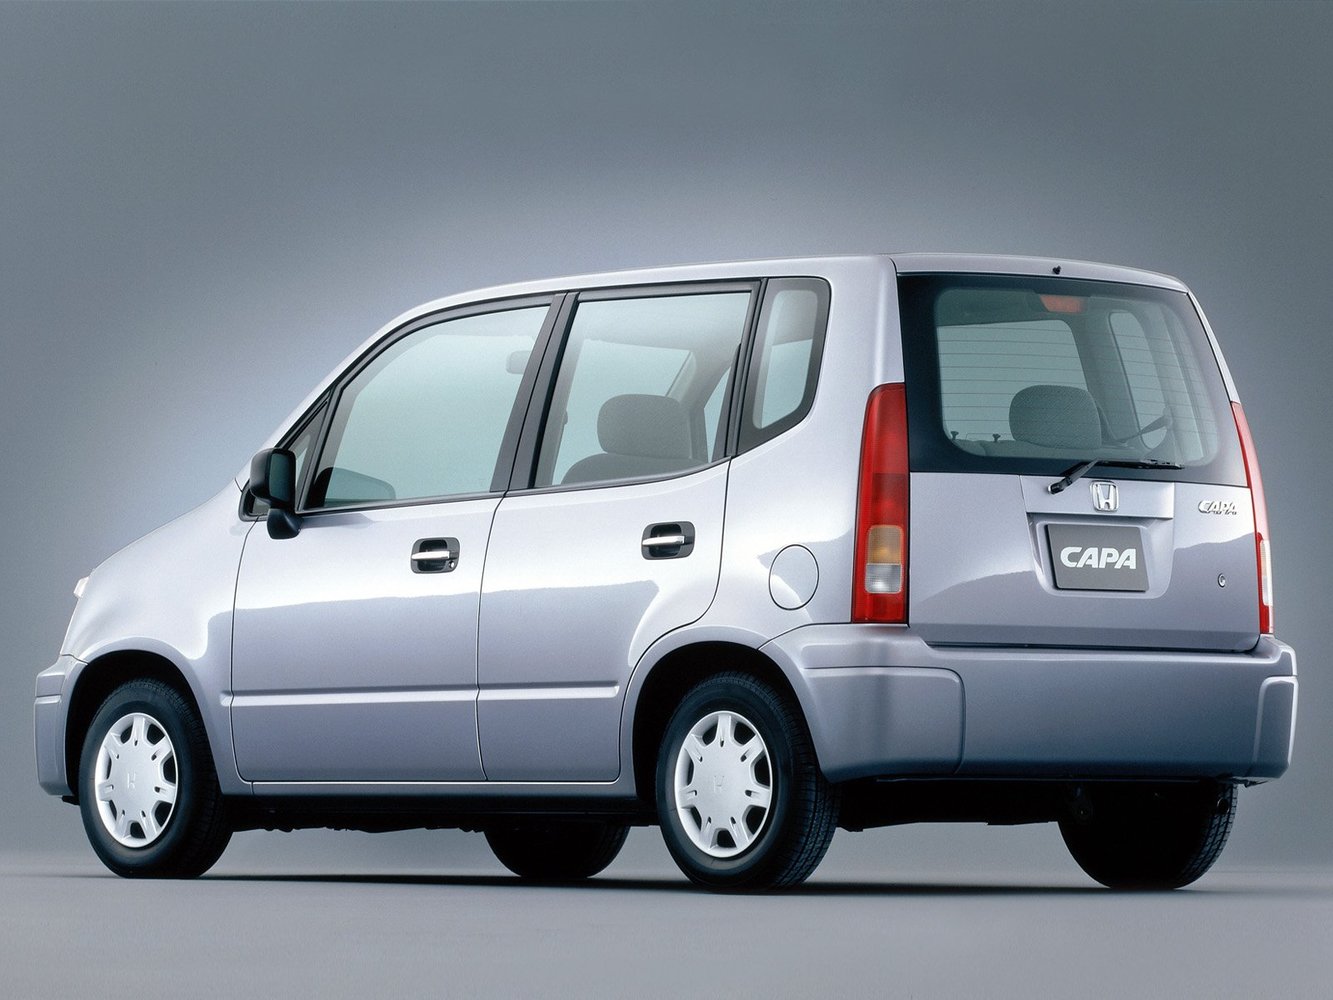 минивэн Honda Capa 1998 - 2002г выпуска модификация 1.5 CVT (98 л.с.)